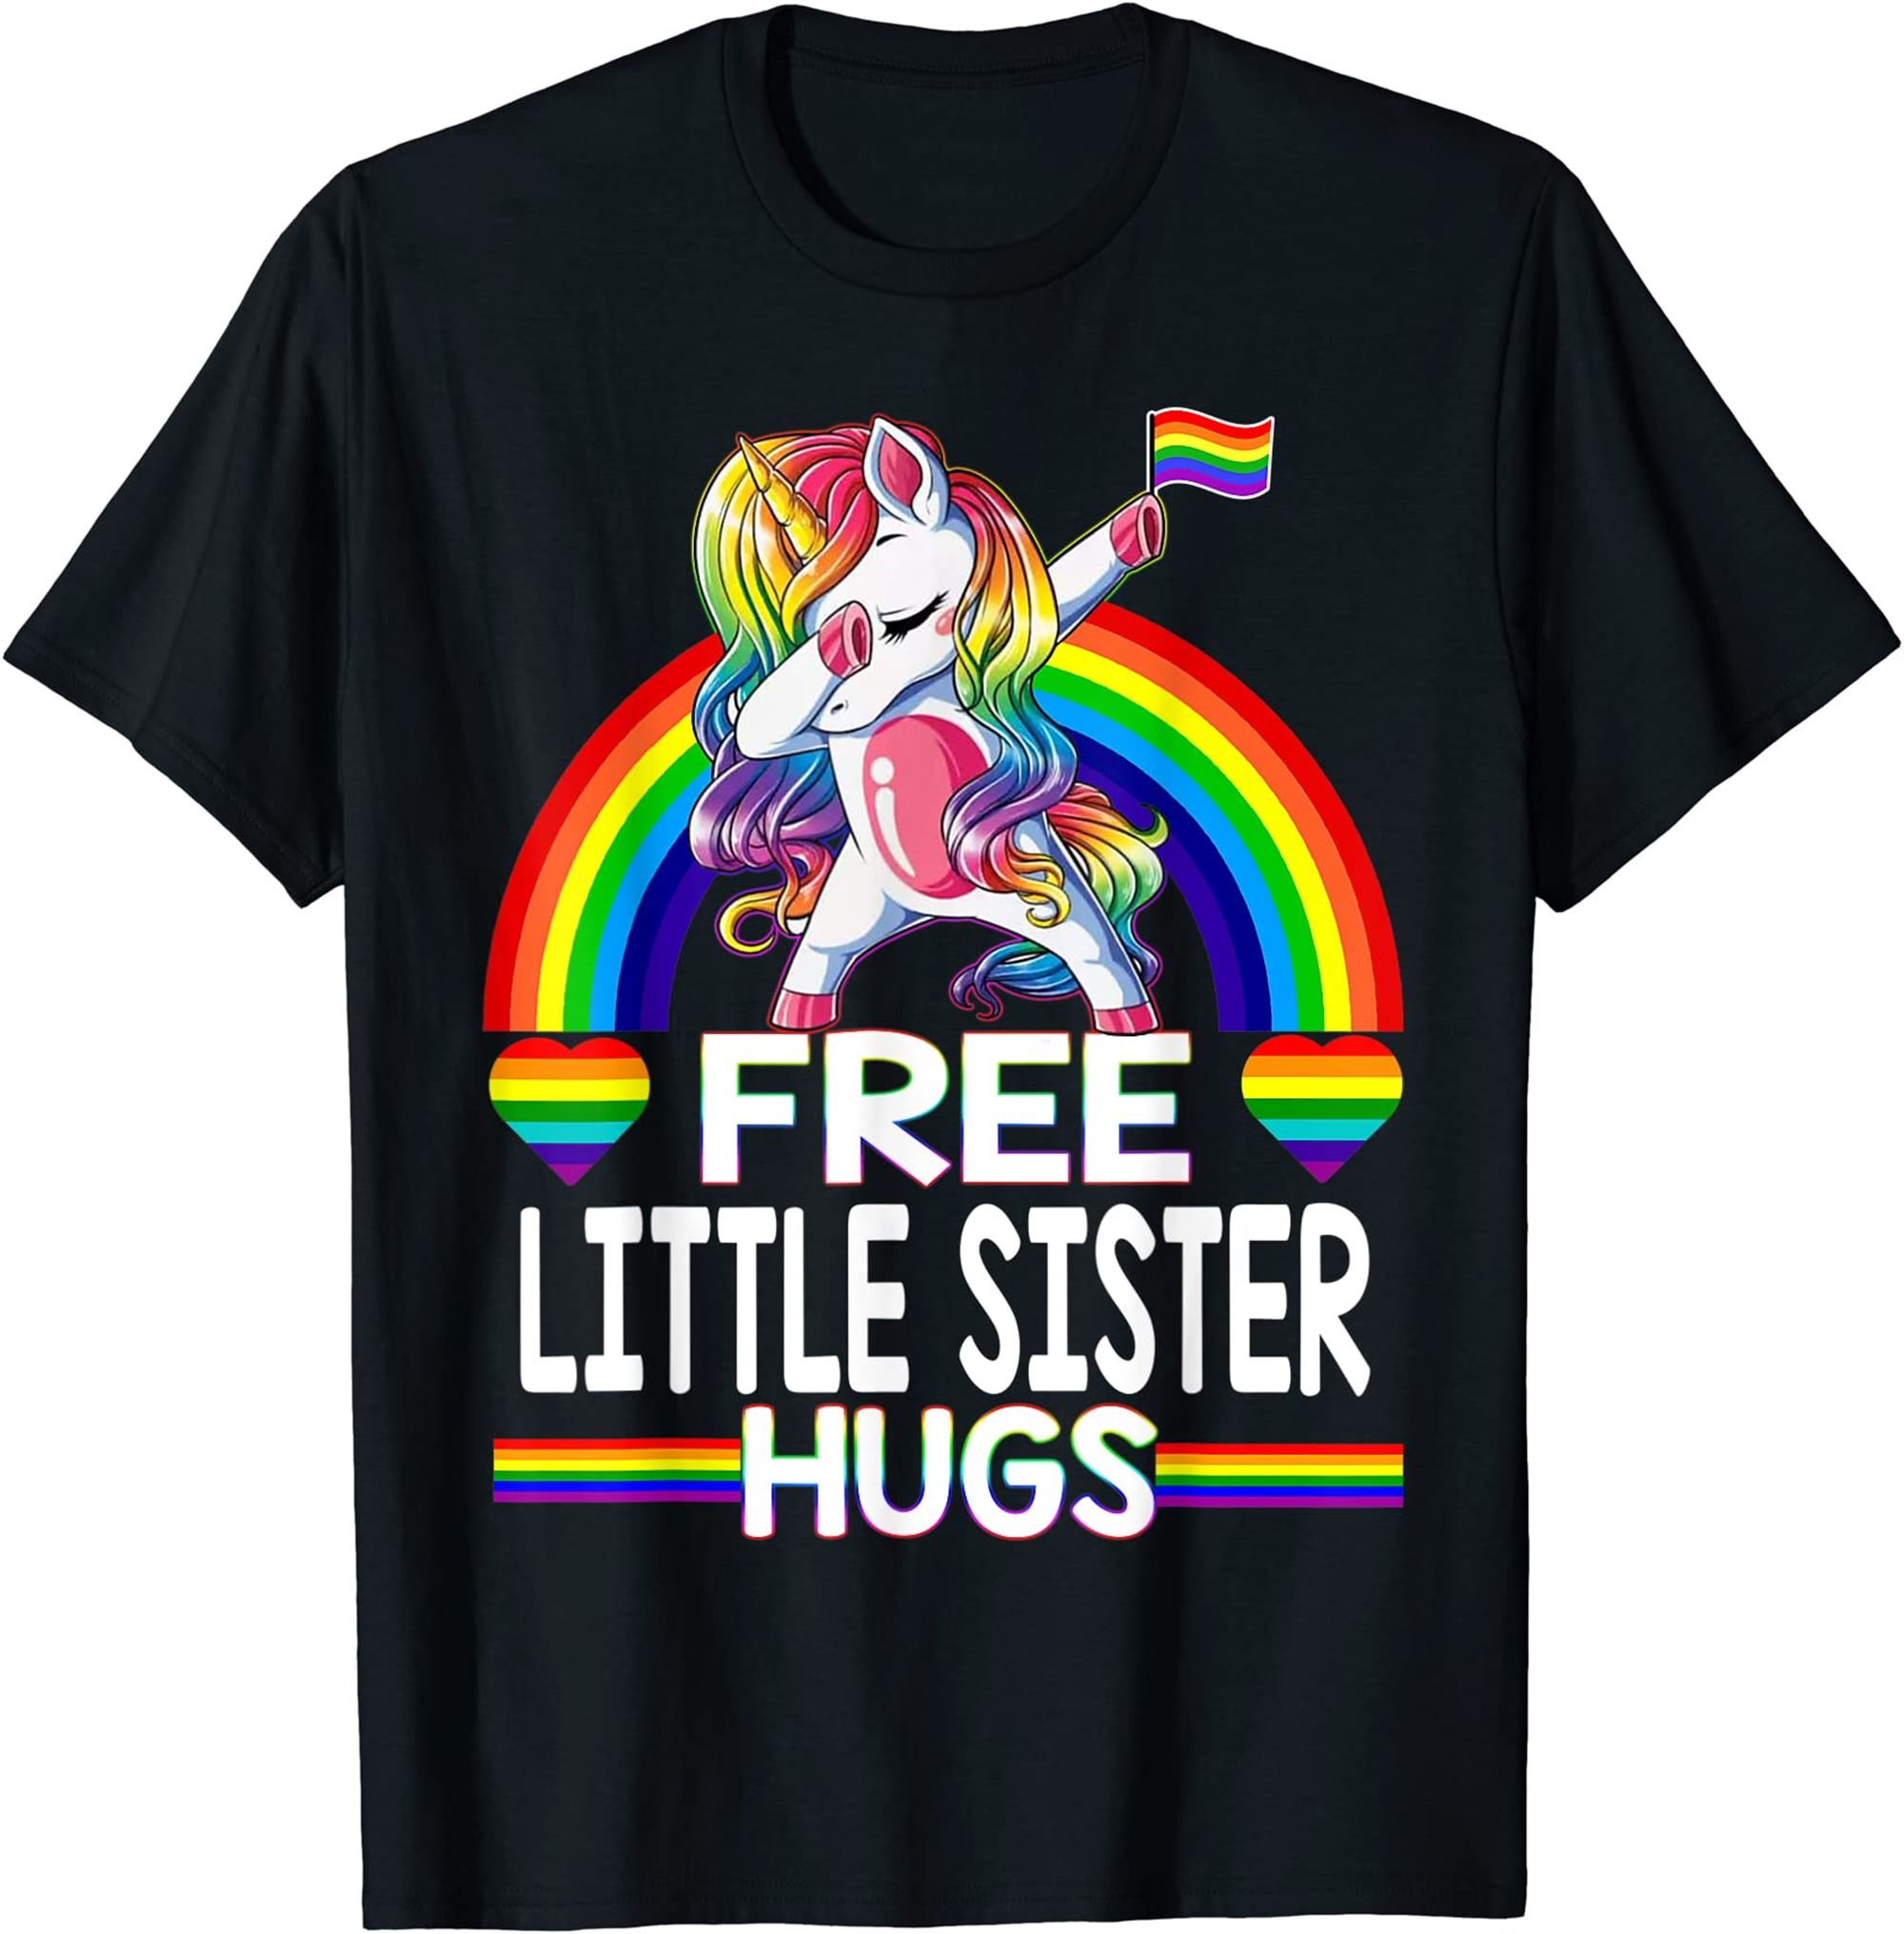 Free Little Sister Hugs Tshirt Unicorn Lgbt Pride Rainbow T-shirt Full Size Up To 5xl